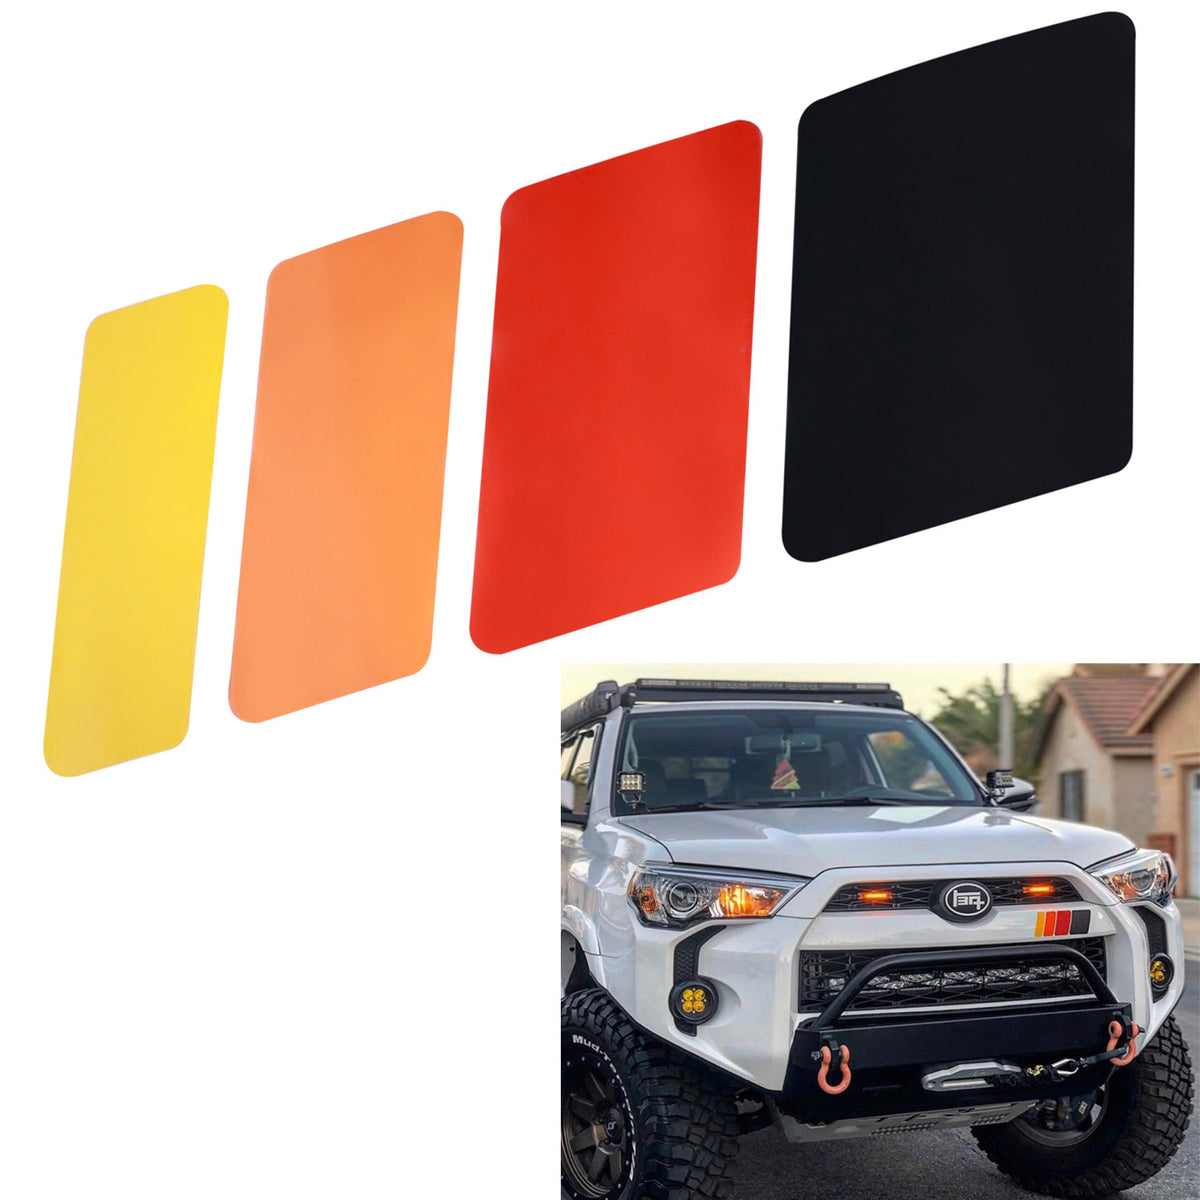 Neo Retro Style Four-Wave Stripe Decal Sticker For Toyota/Lexus